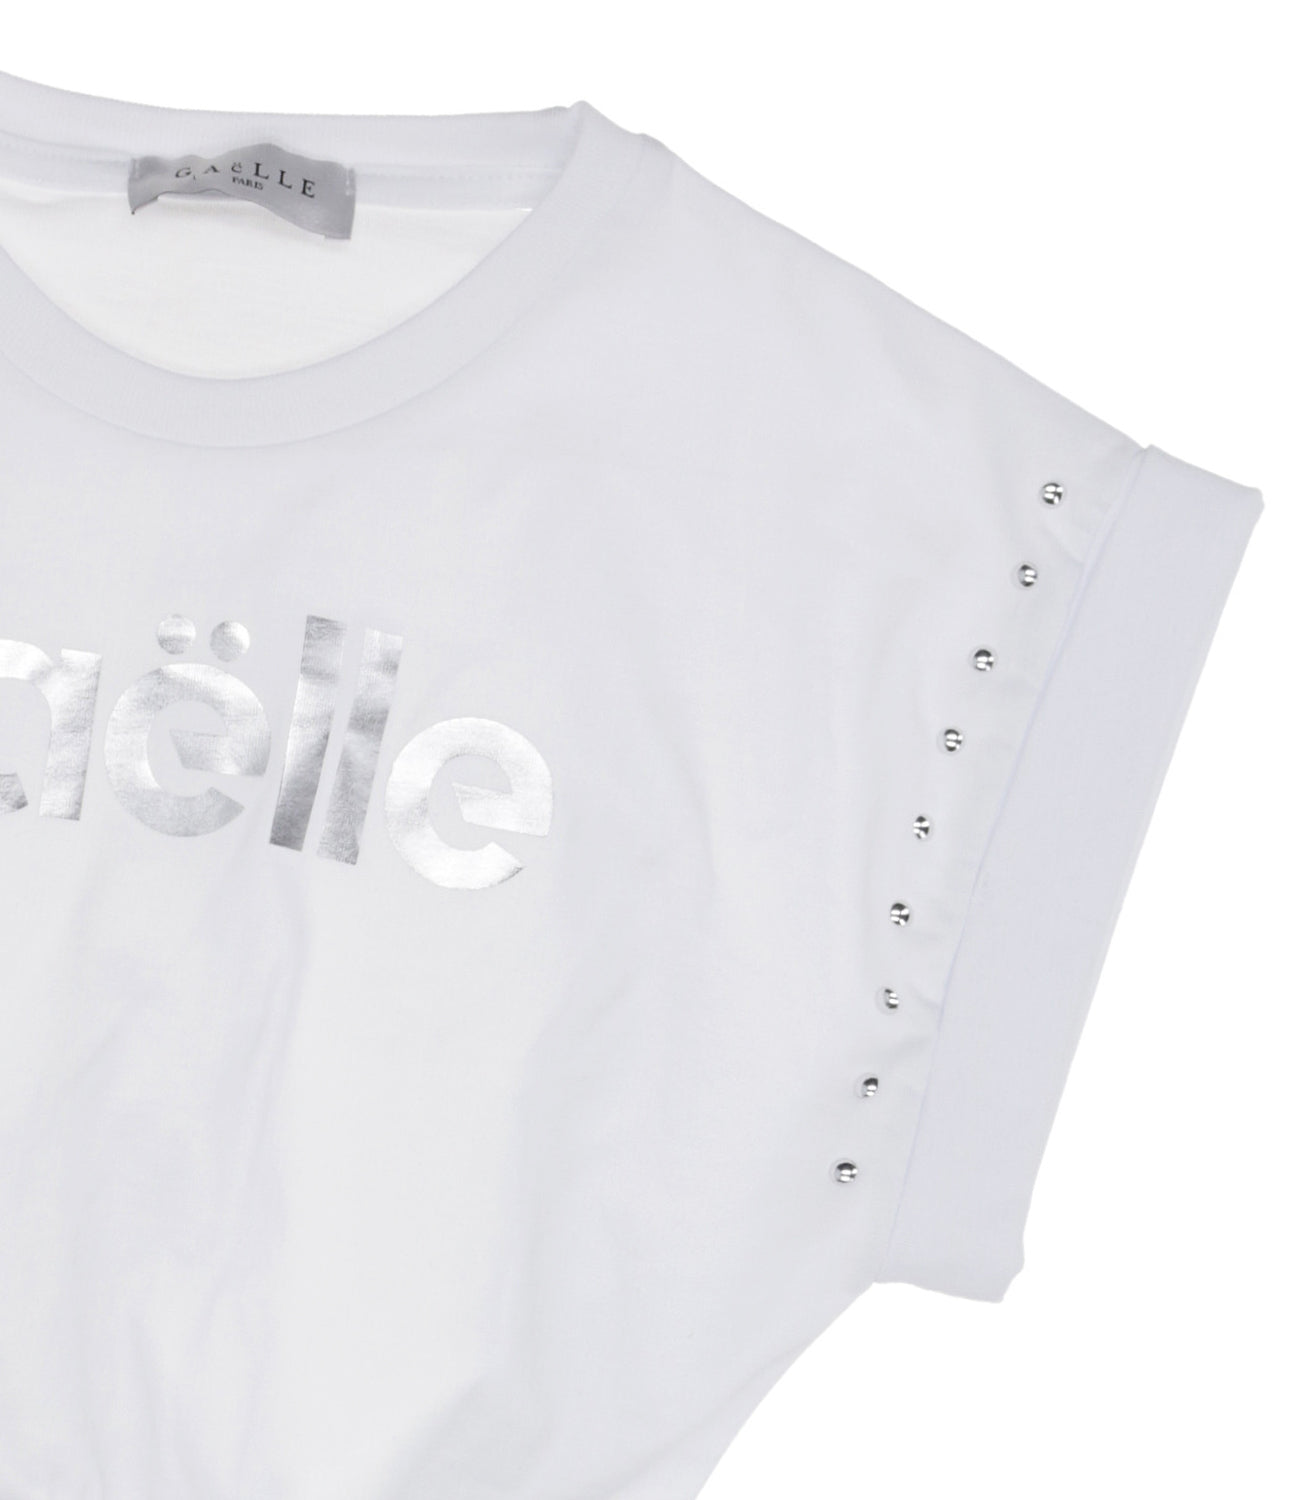 Gaelle Paris Kids | T-Shirt Bianco Ottico